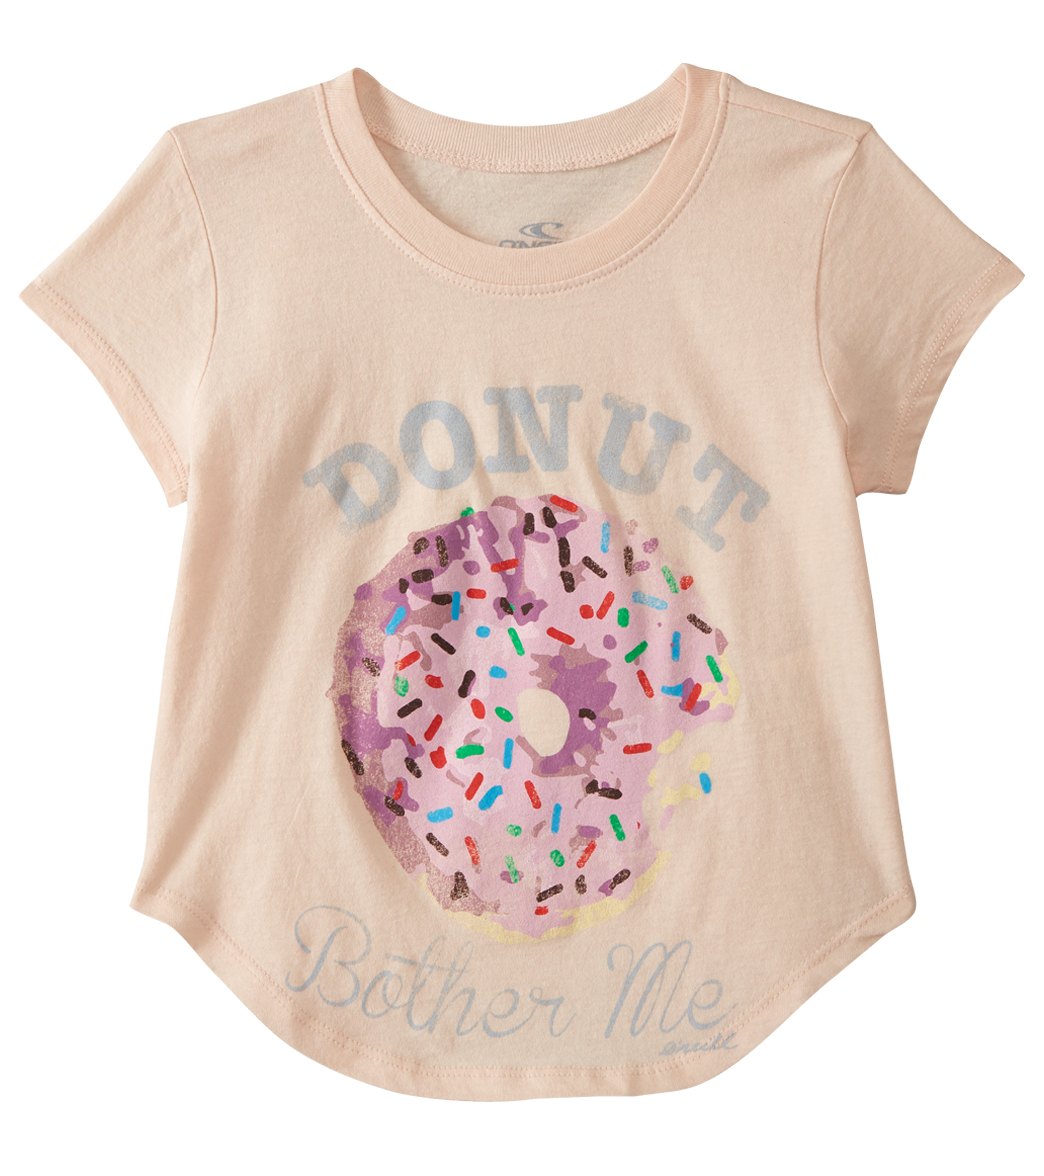 reebok donut shirt